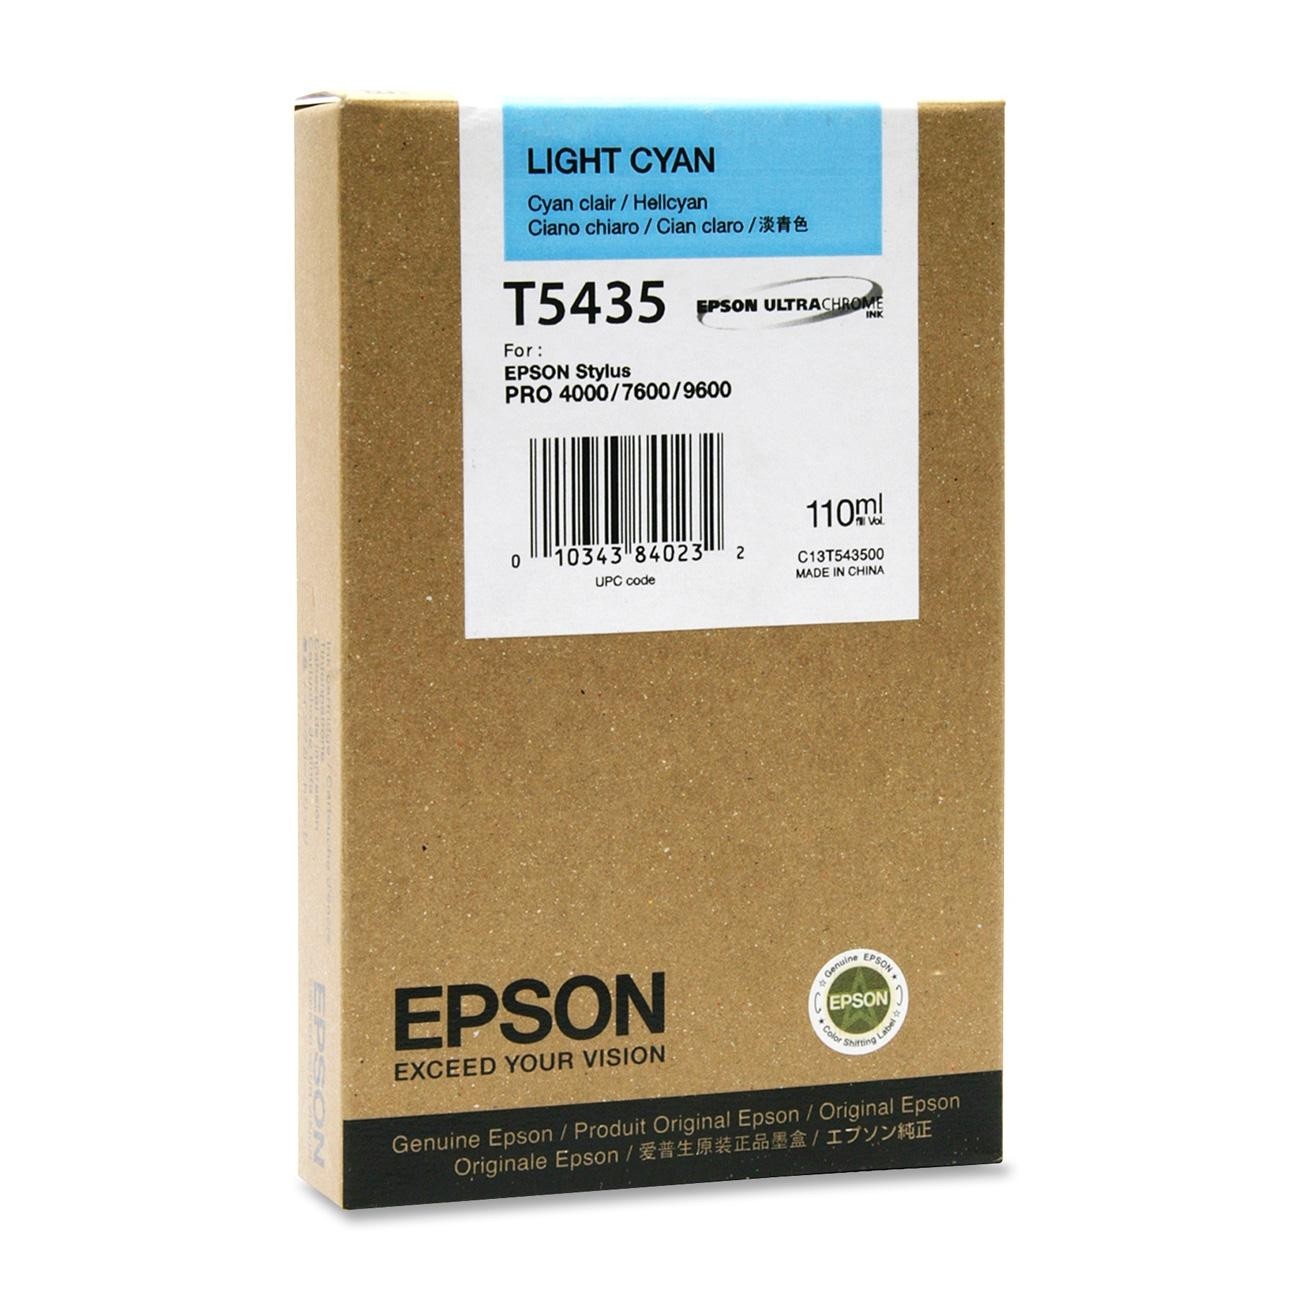 Epson T543500 cartuccia cyano-chiaro, capacit� 110ml